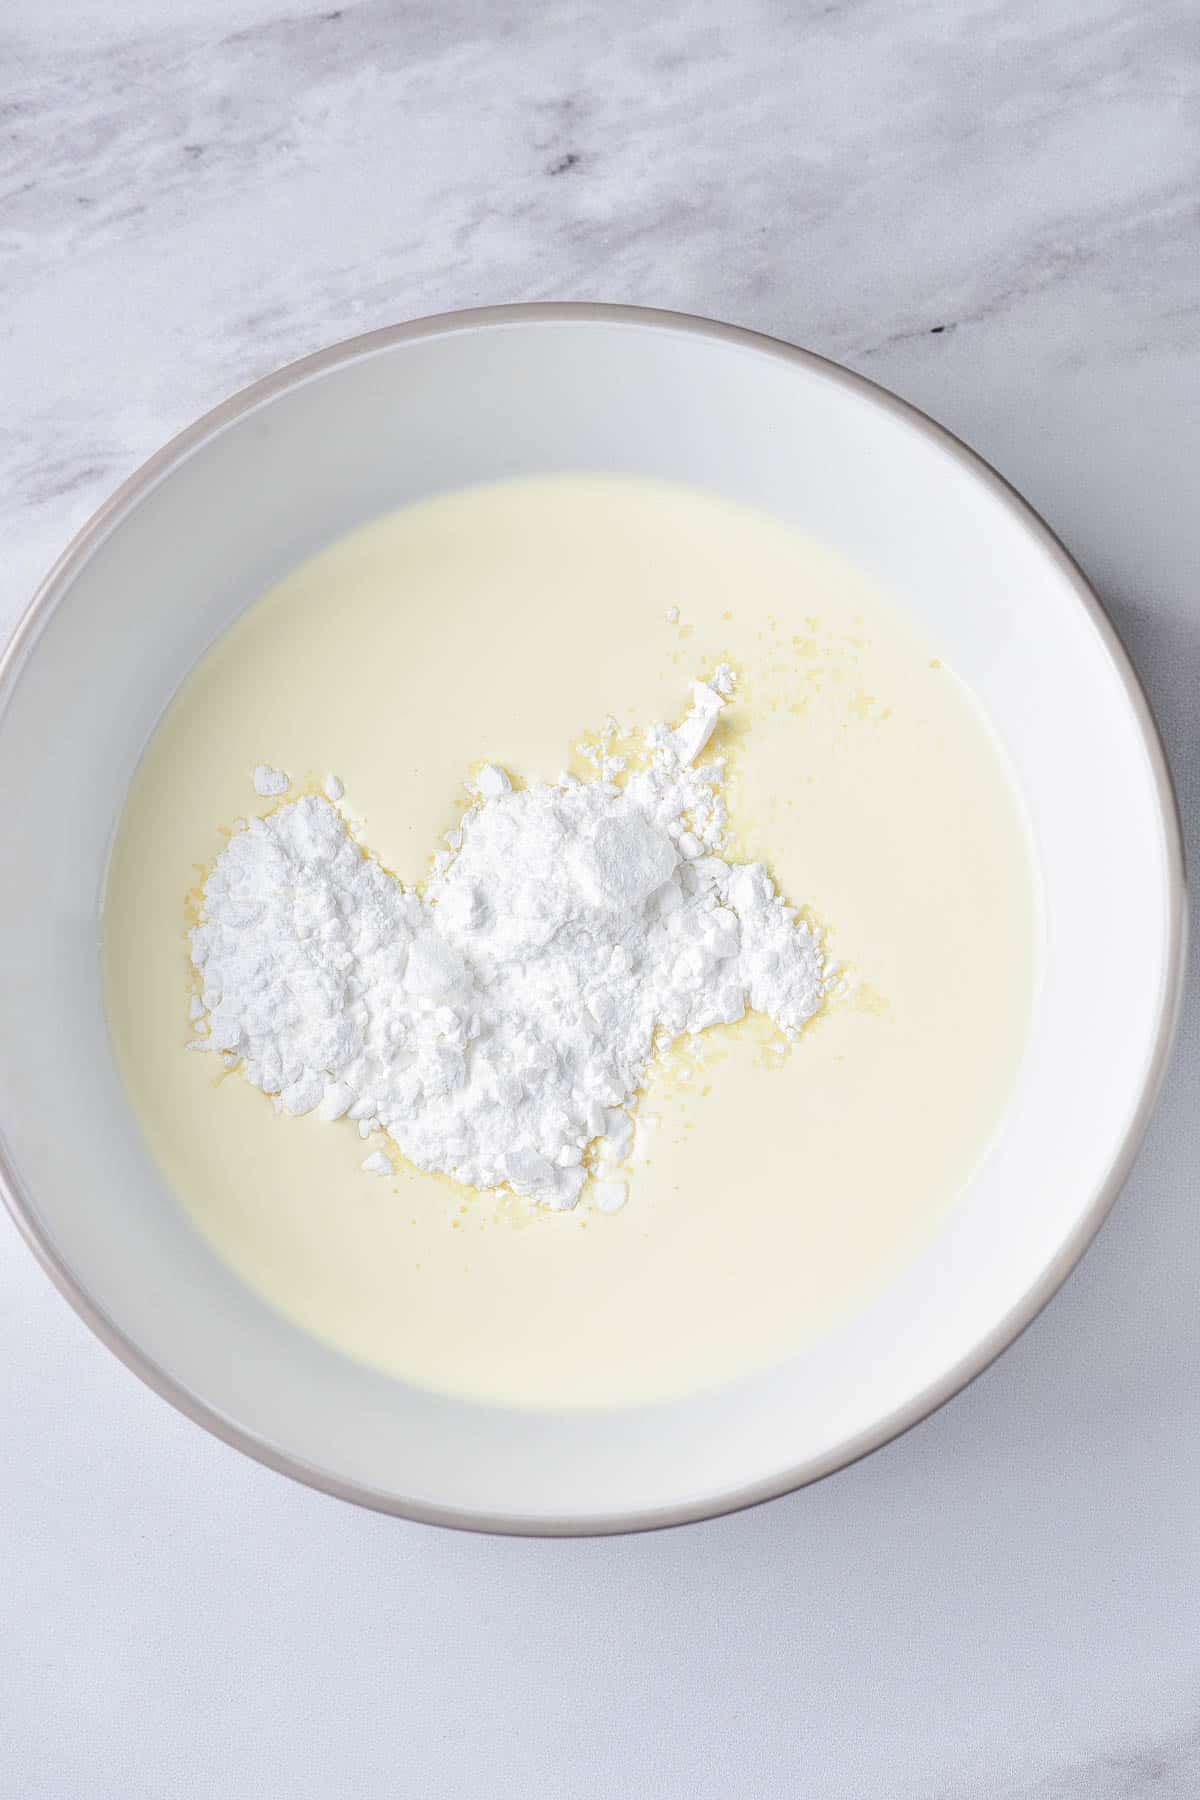 Heavy cream and powdered sugar in a white bowl.